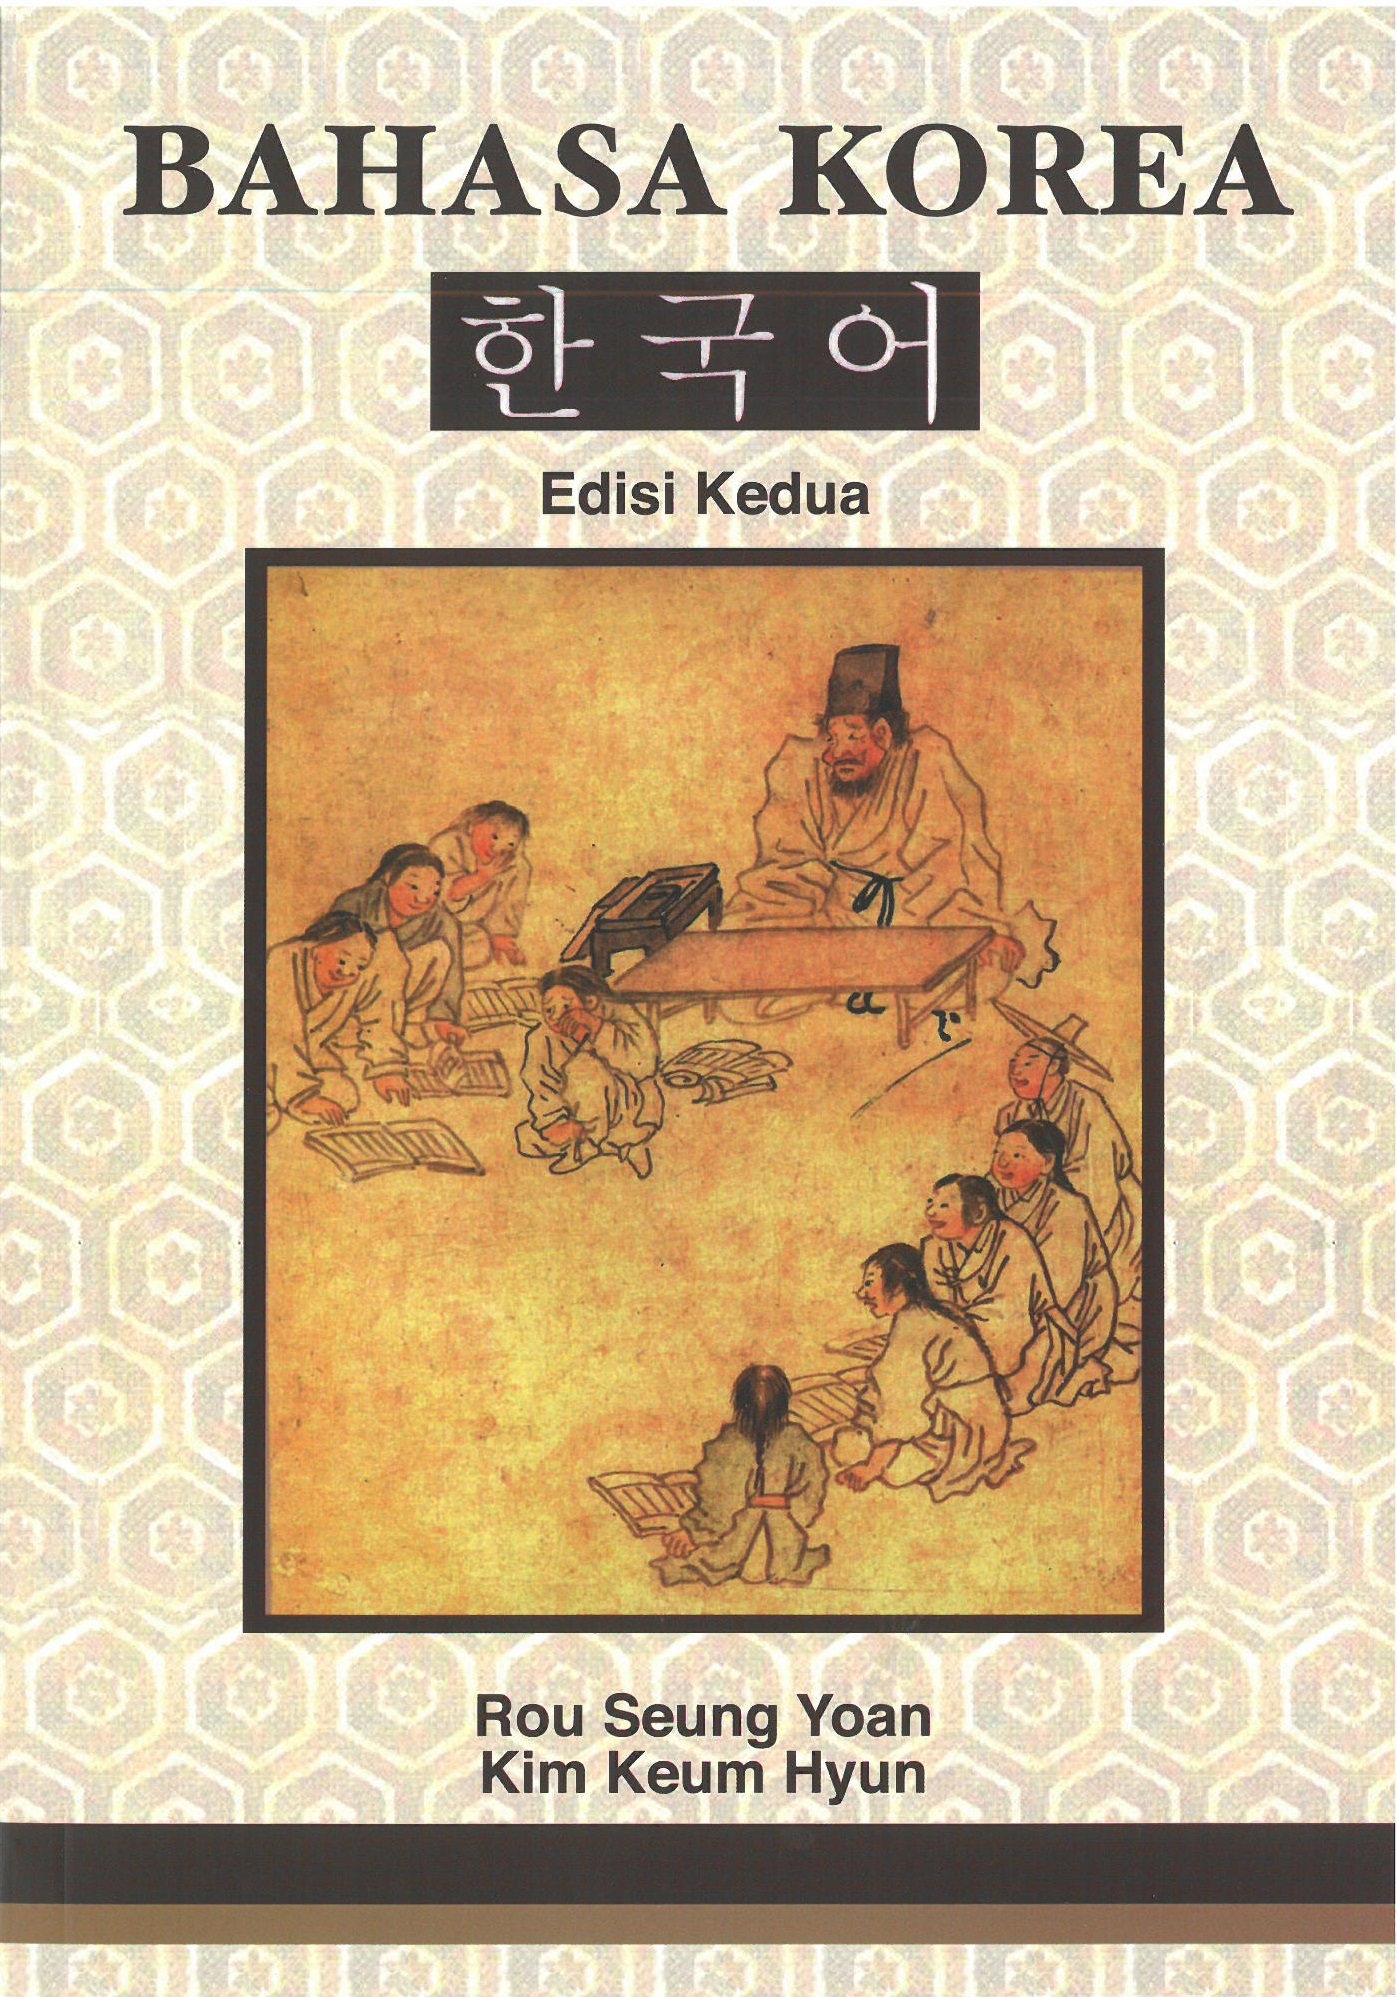 Bahasa Korea (ed. 2) (cet.2) - Malaysia's Online Bookstore"